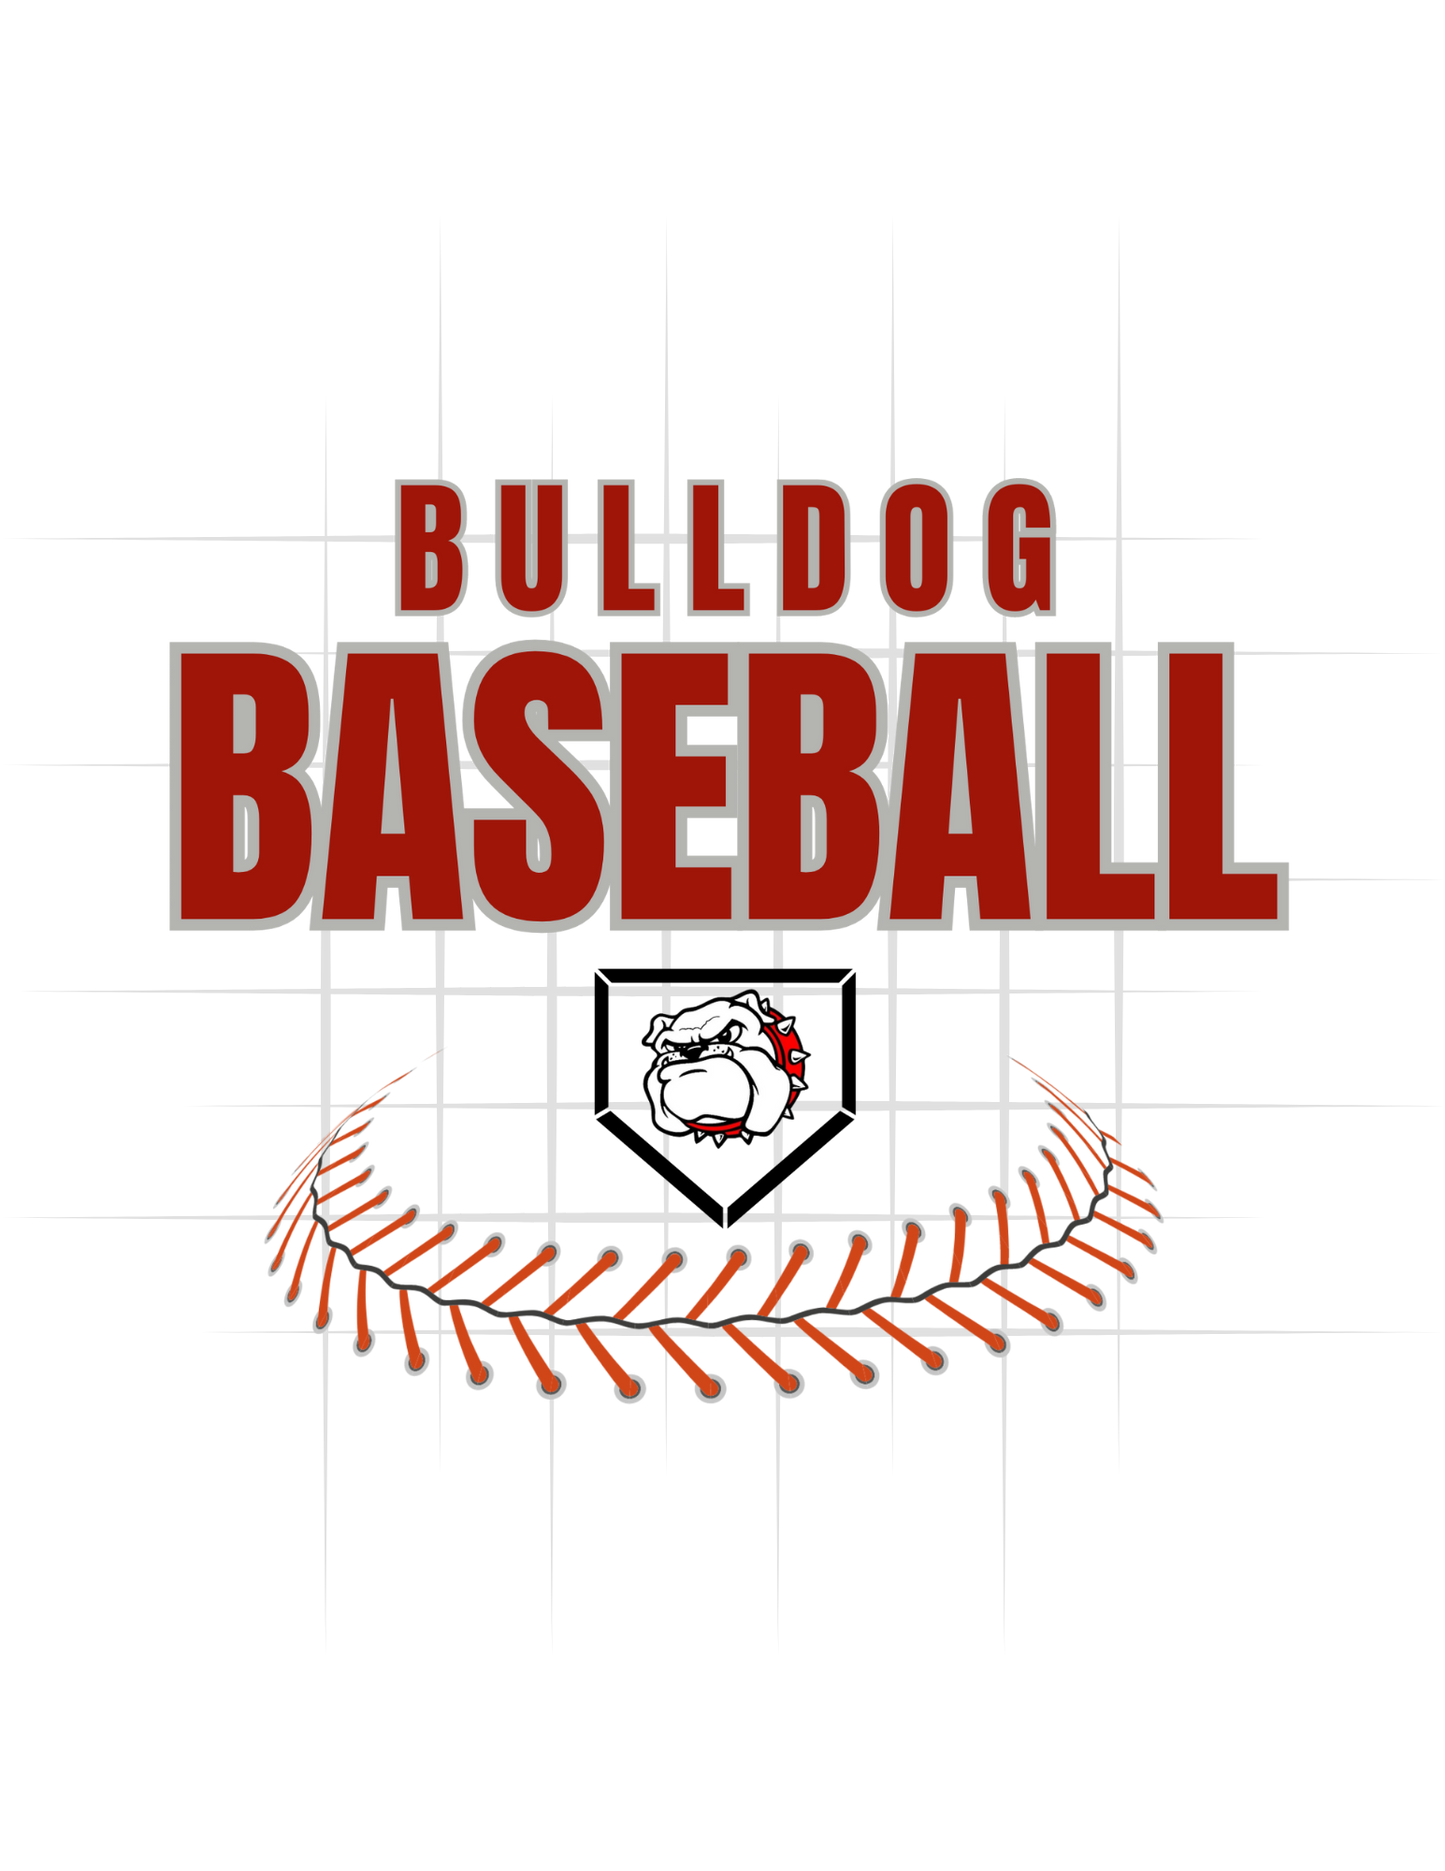 Bulldog Baseball Curved Laces Tee